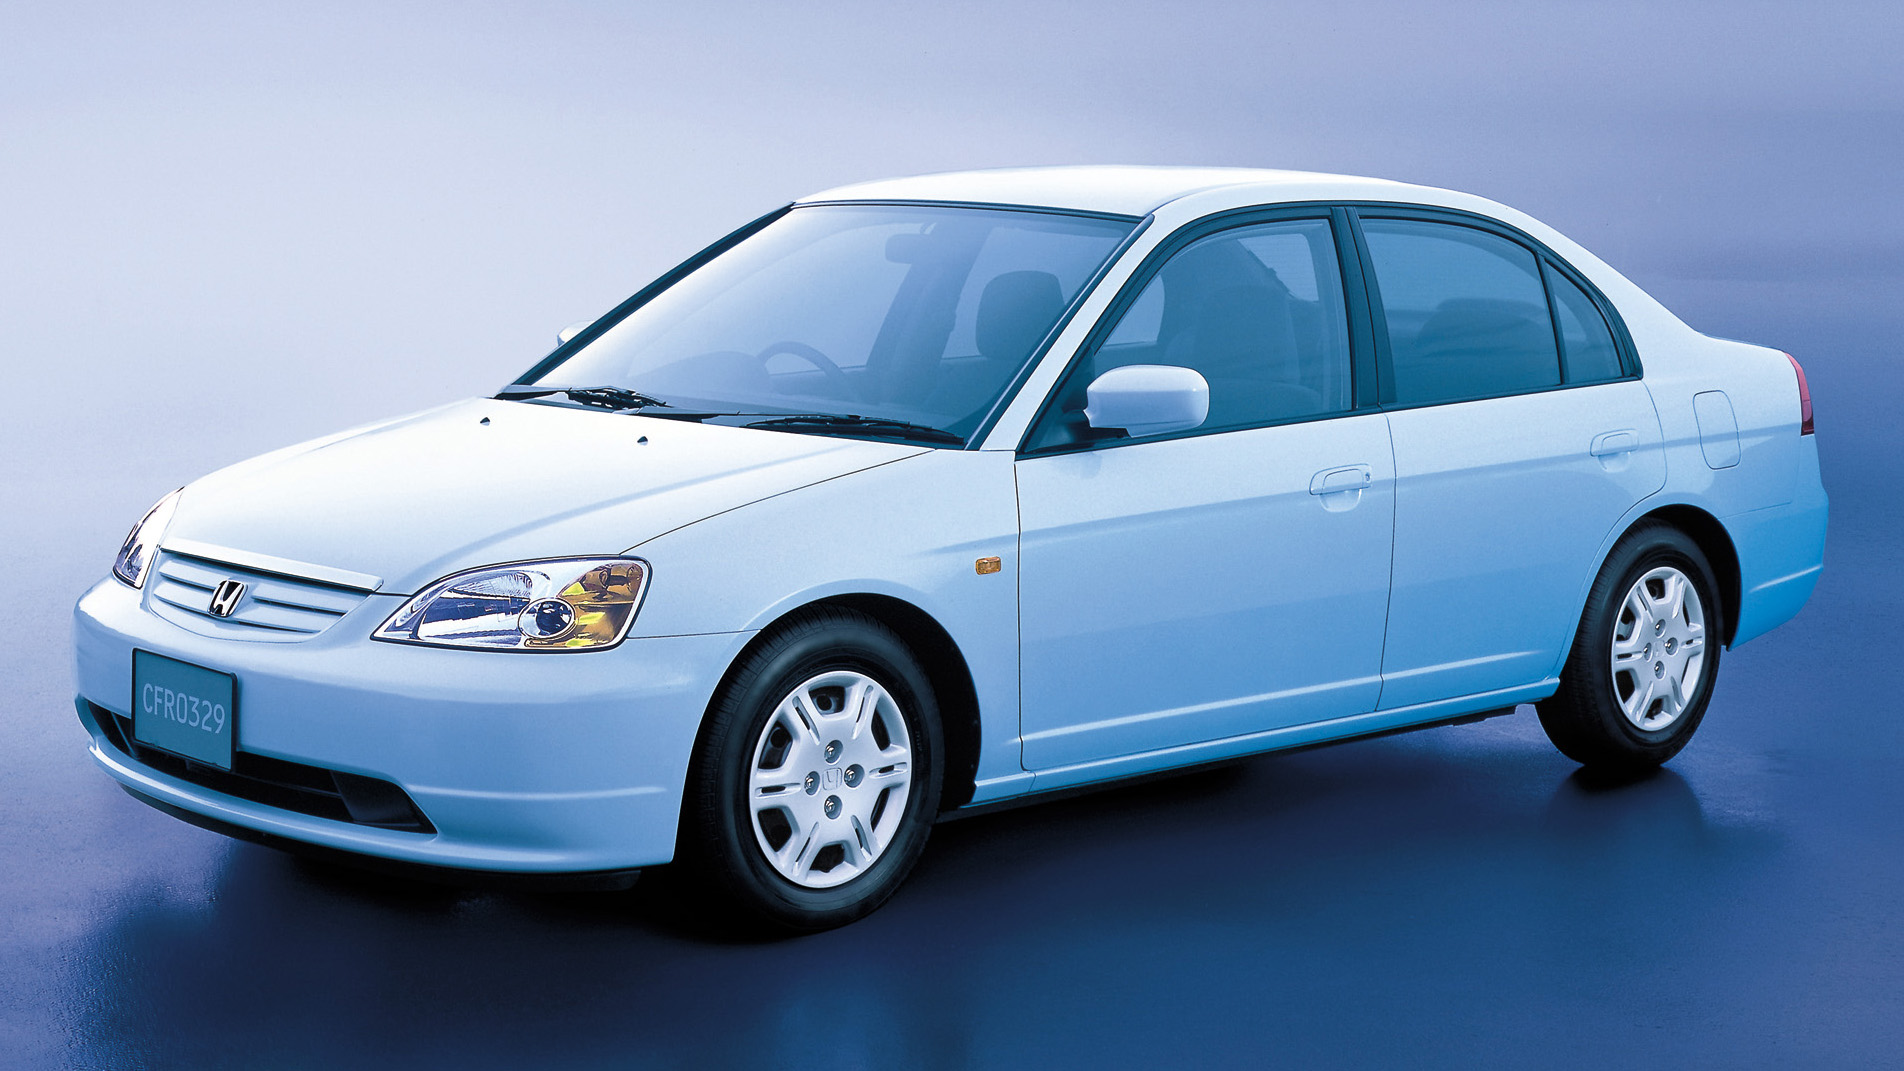 Honda civic recalls airbags #1